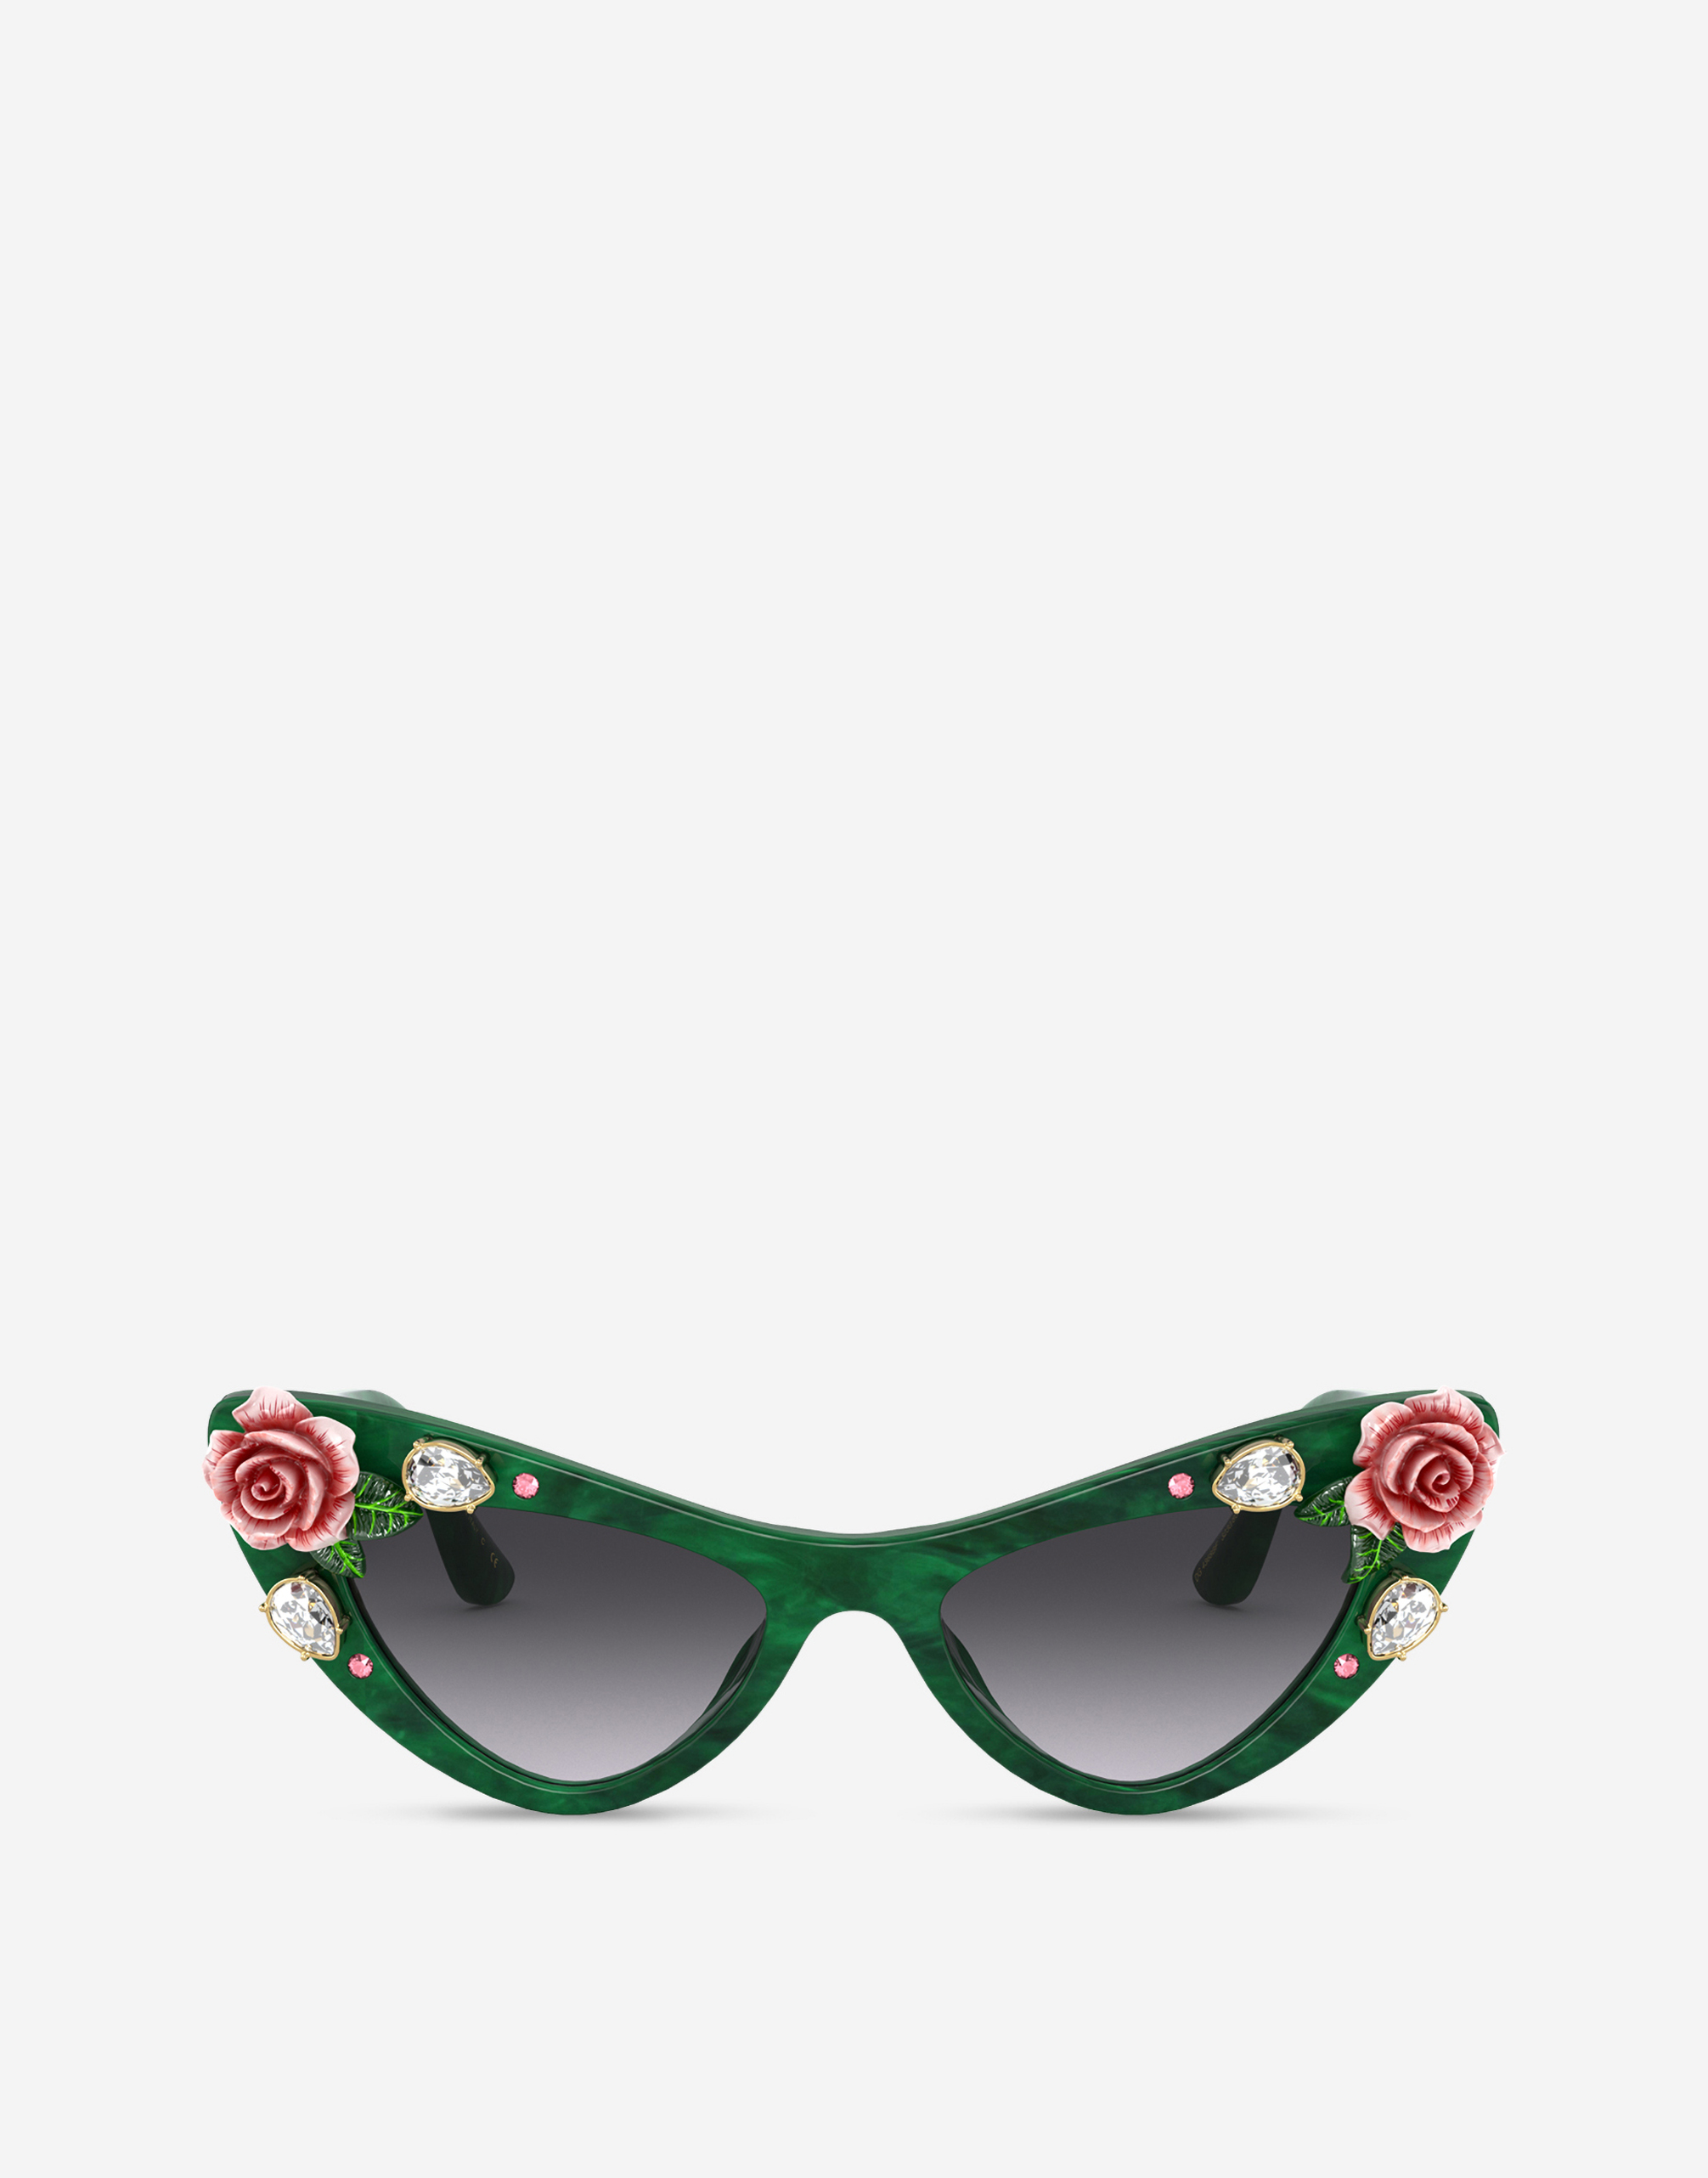 Tropical rose sunglasses in Green